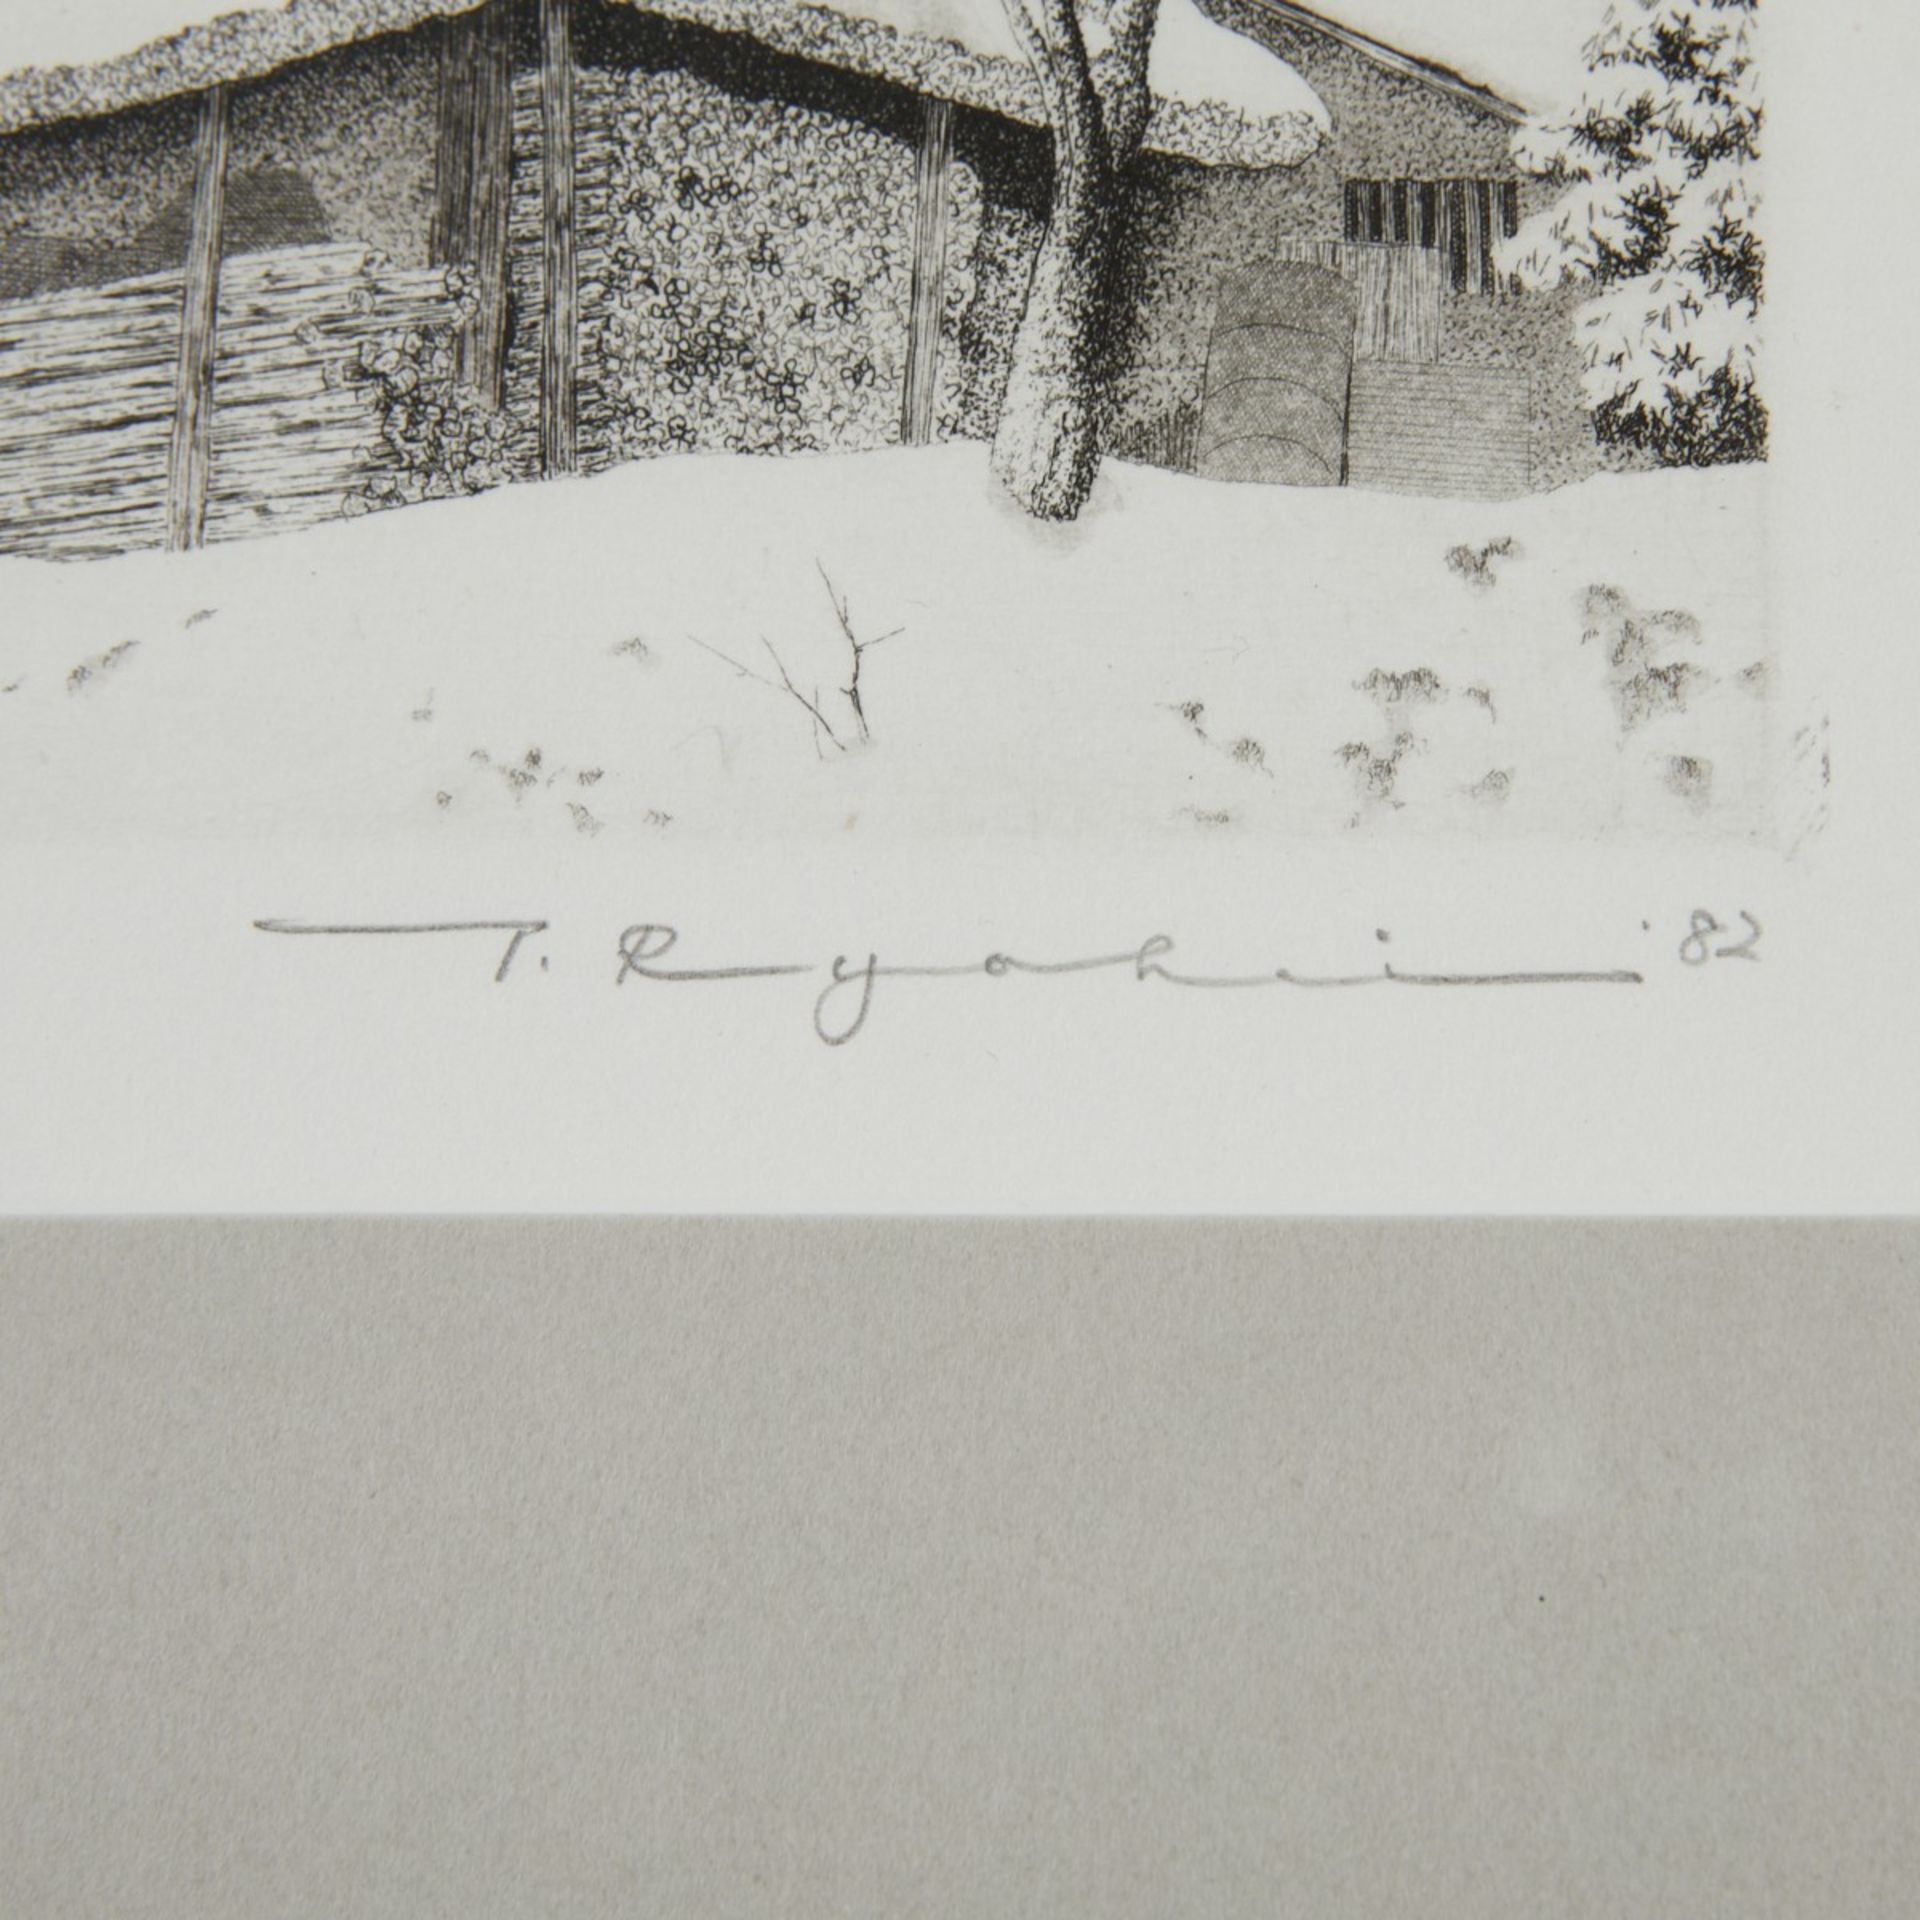 Ryohei Tanaka "Snow on Thatched Roof #2" Shin-hanga Print - Image 3 of 4